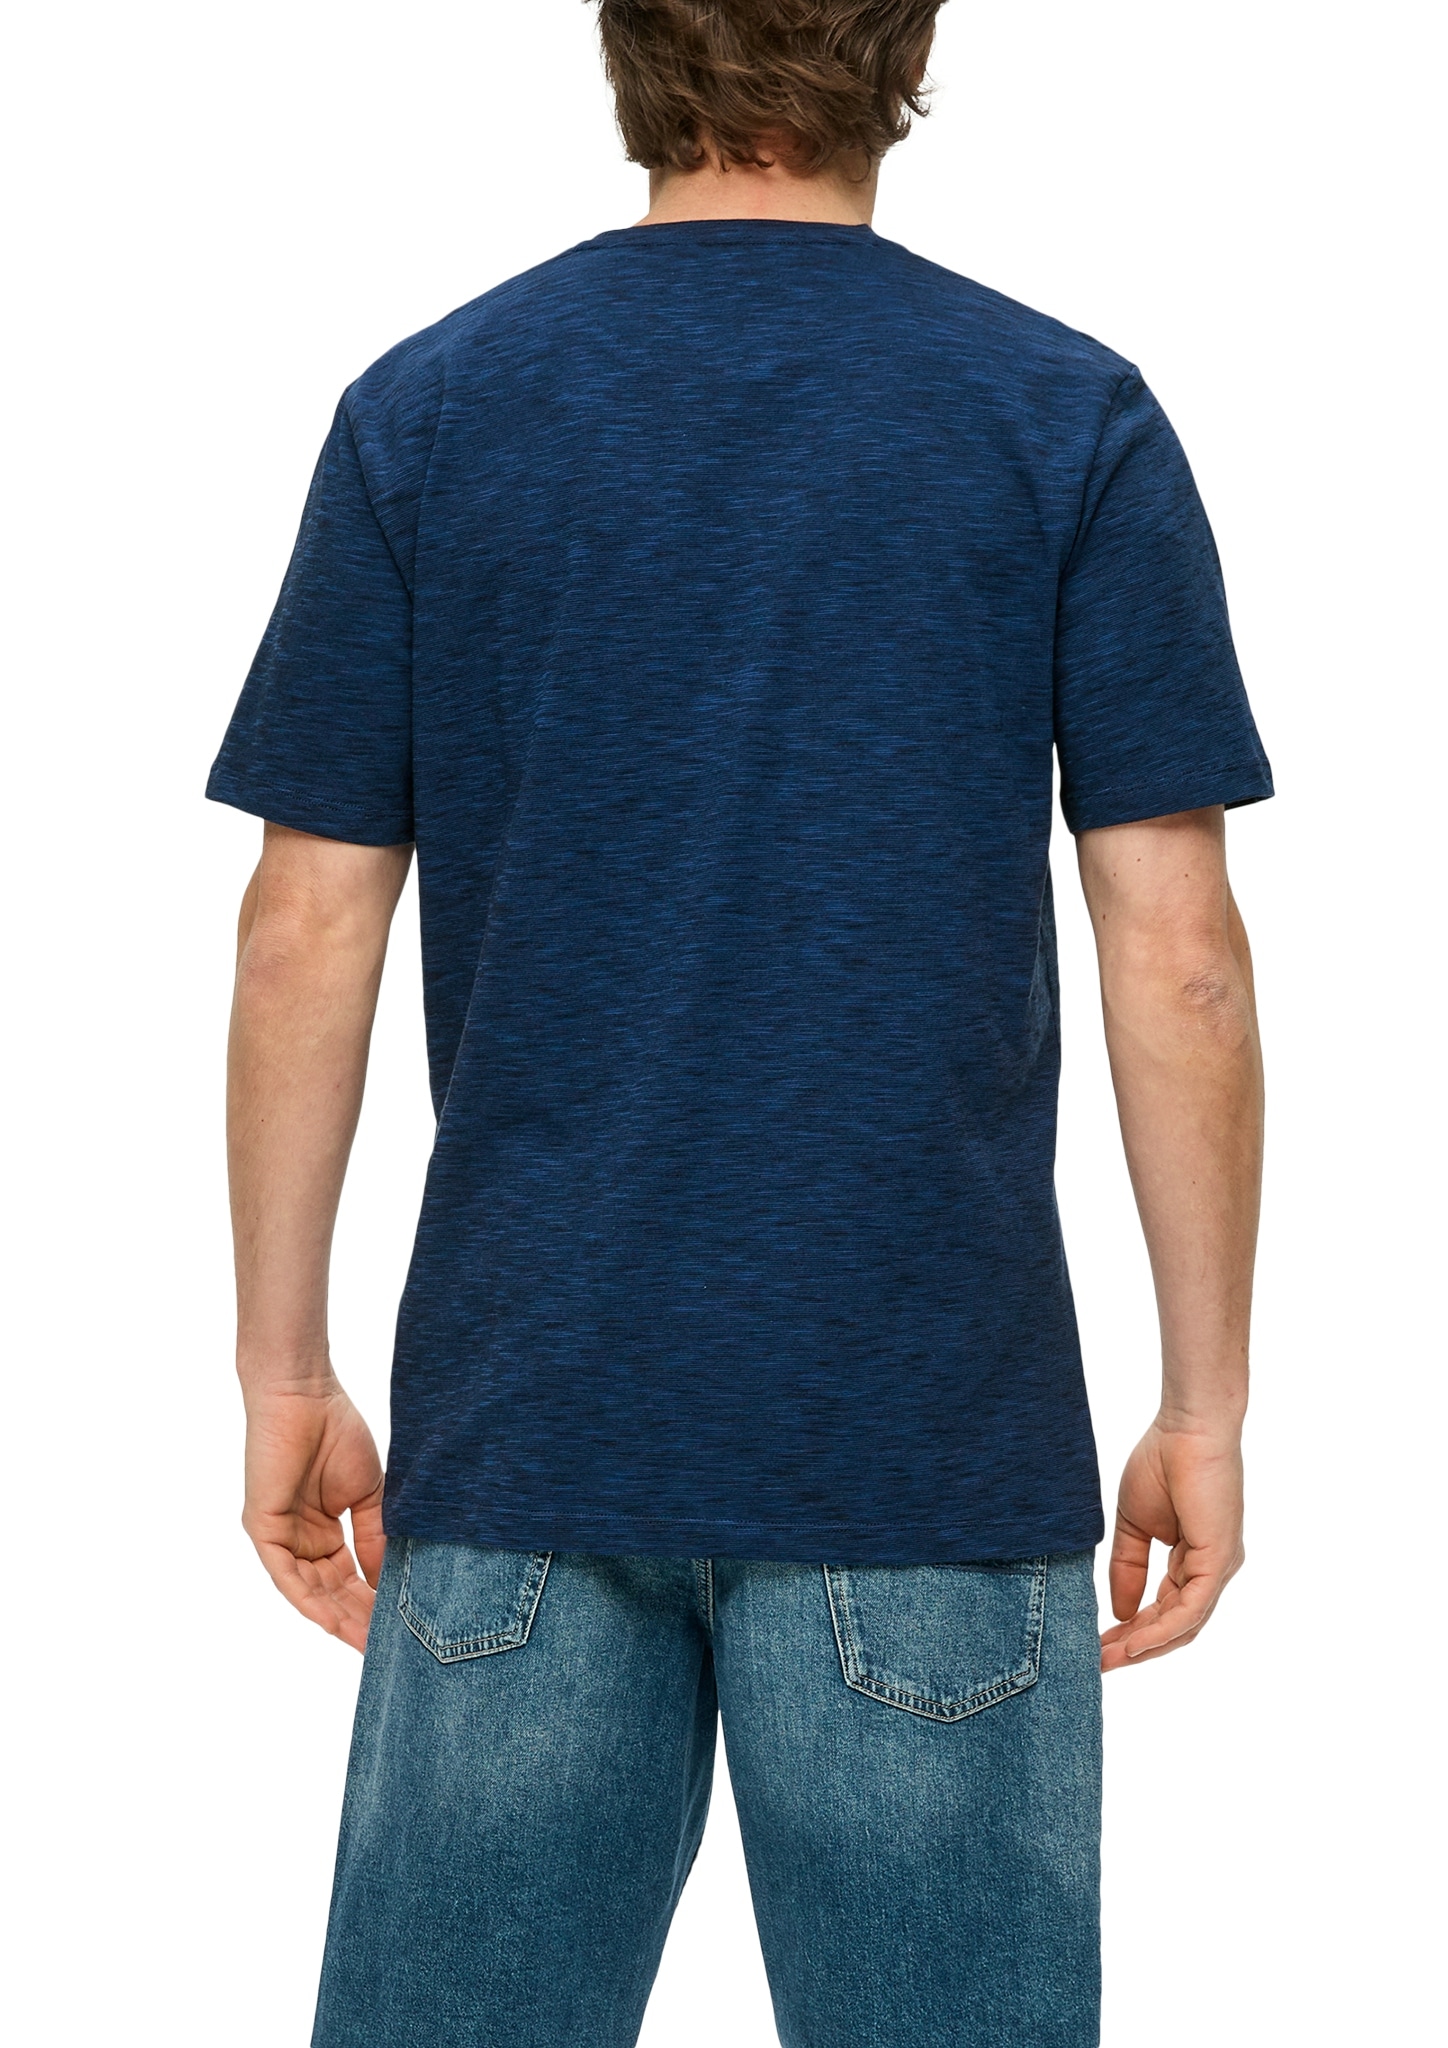 s.Oliver T-Shirt, mit Labelprint